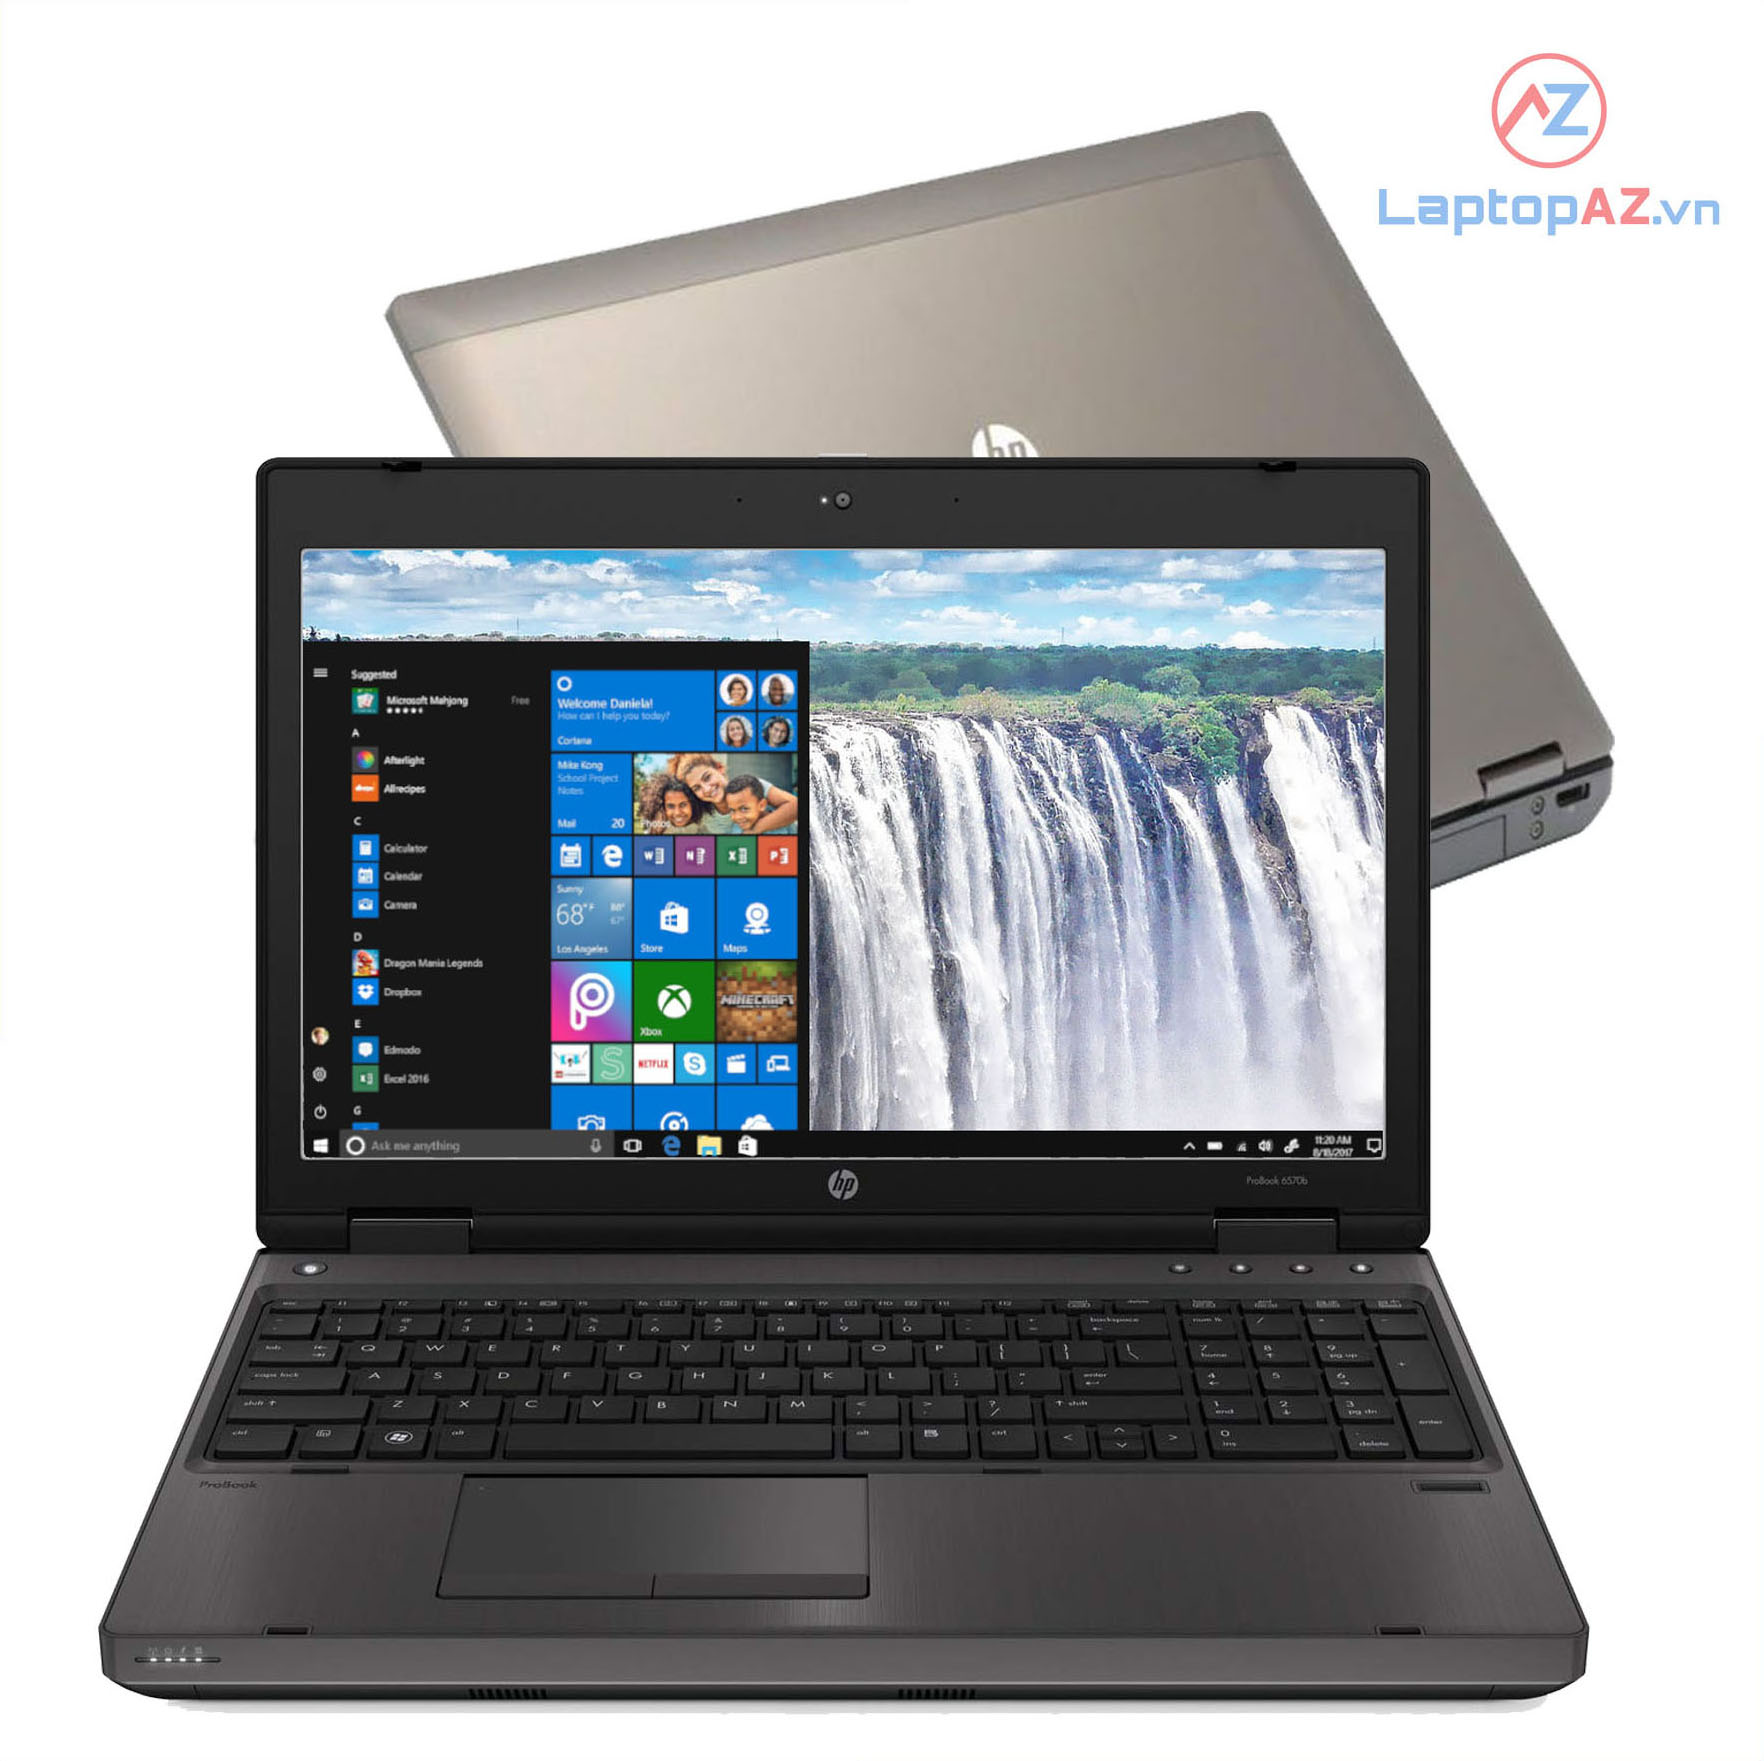 [Like New] HP Probook 6570b (Core i5-3210M, 4GB, 250 GB, VGA intel HD Graphics 4000, 15.6 inch)